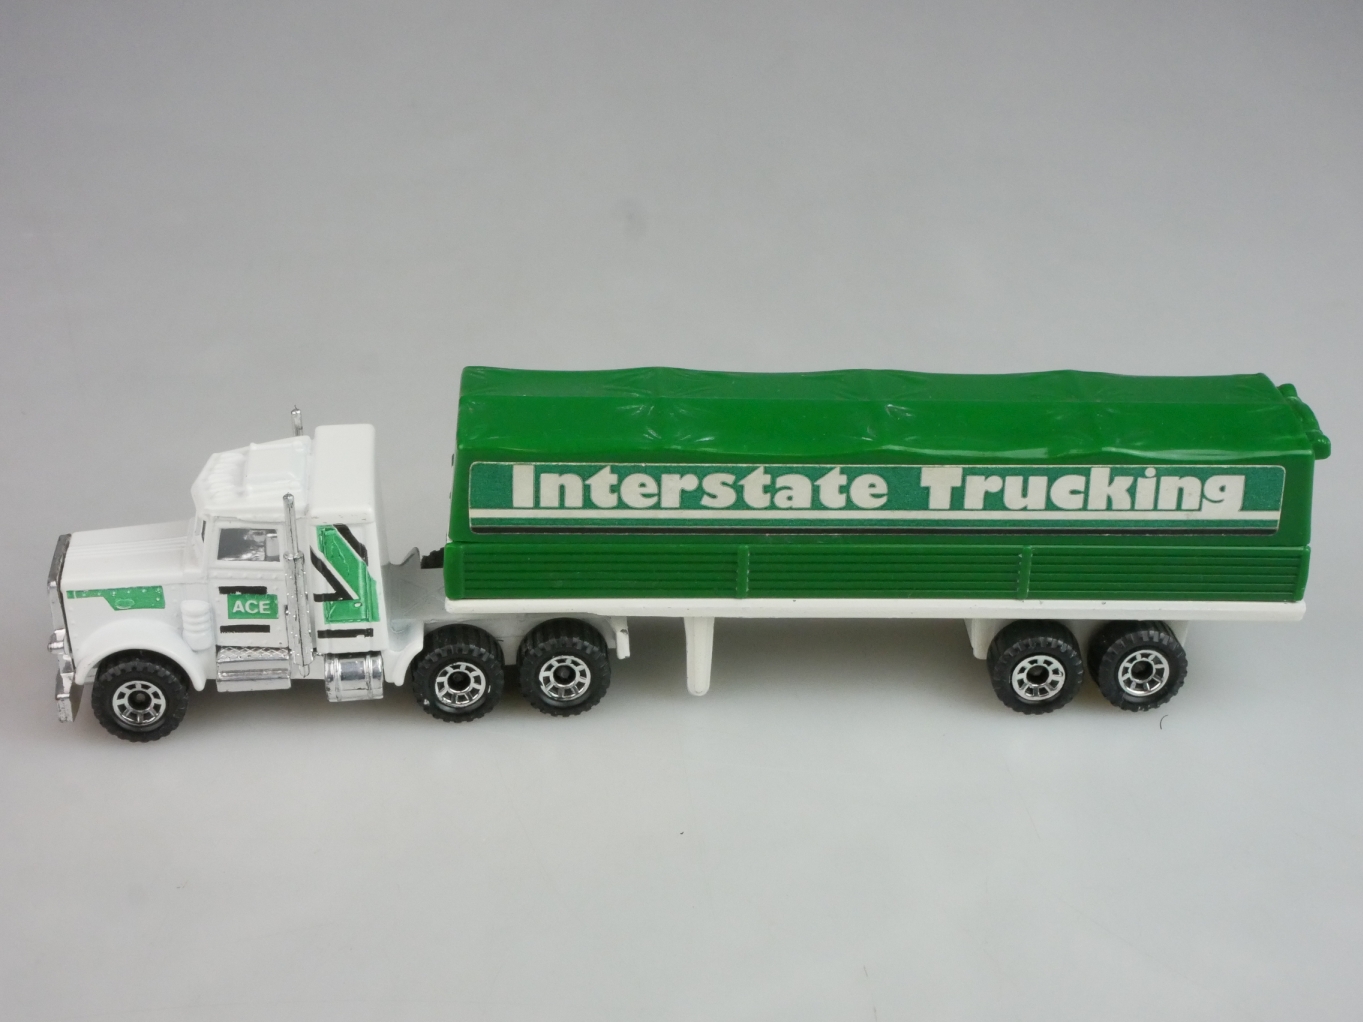 CY-005A Peterbilt Covered Truck Interstate Trucking - 27669